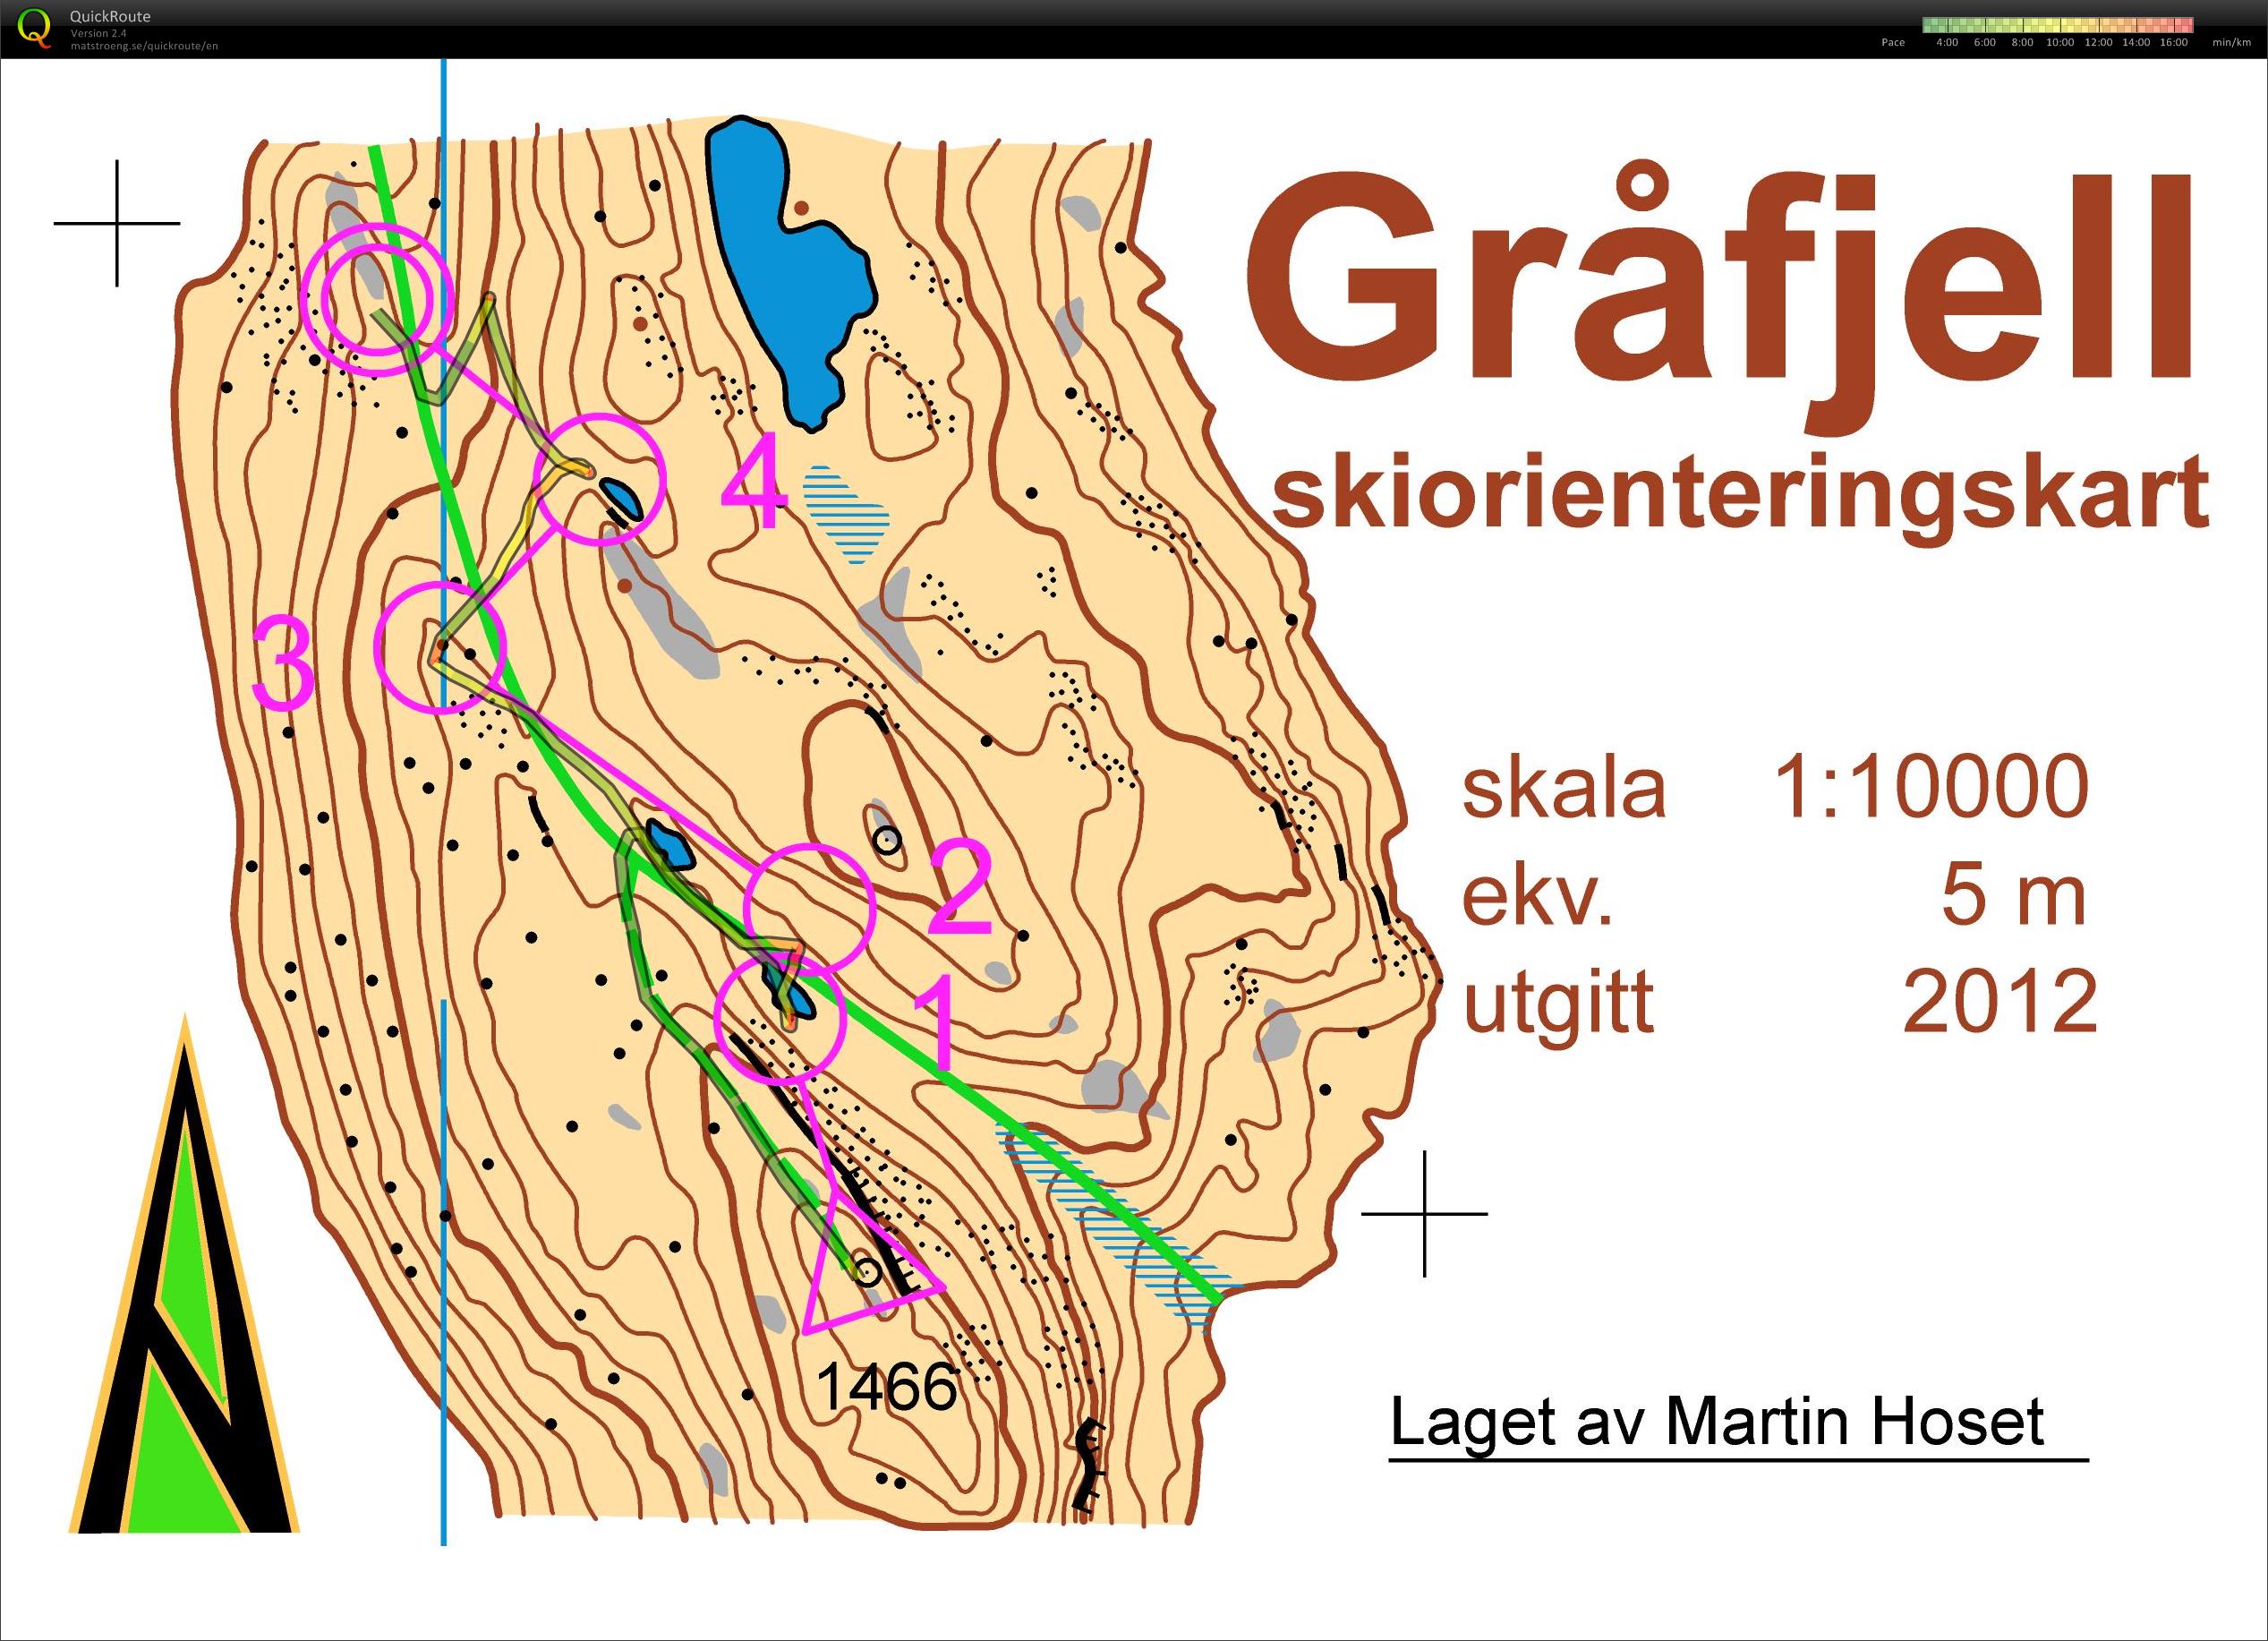 SkiO på norefjells tak (2013-03-23)